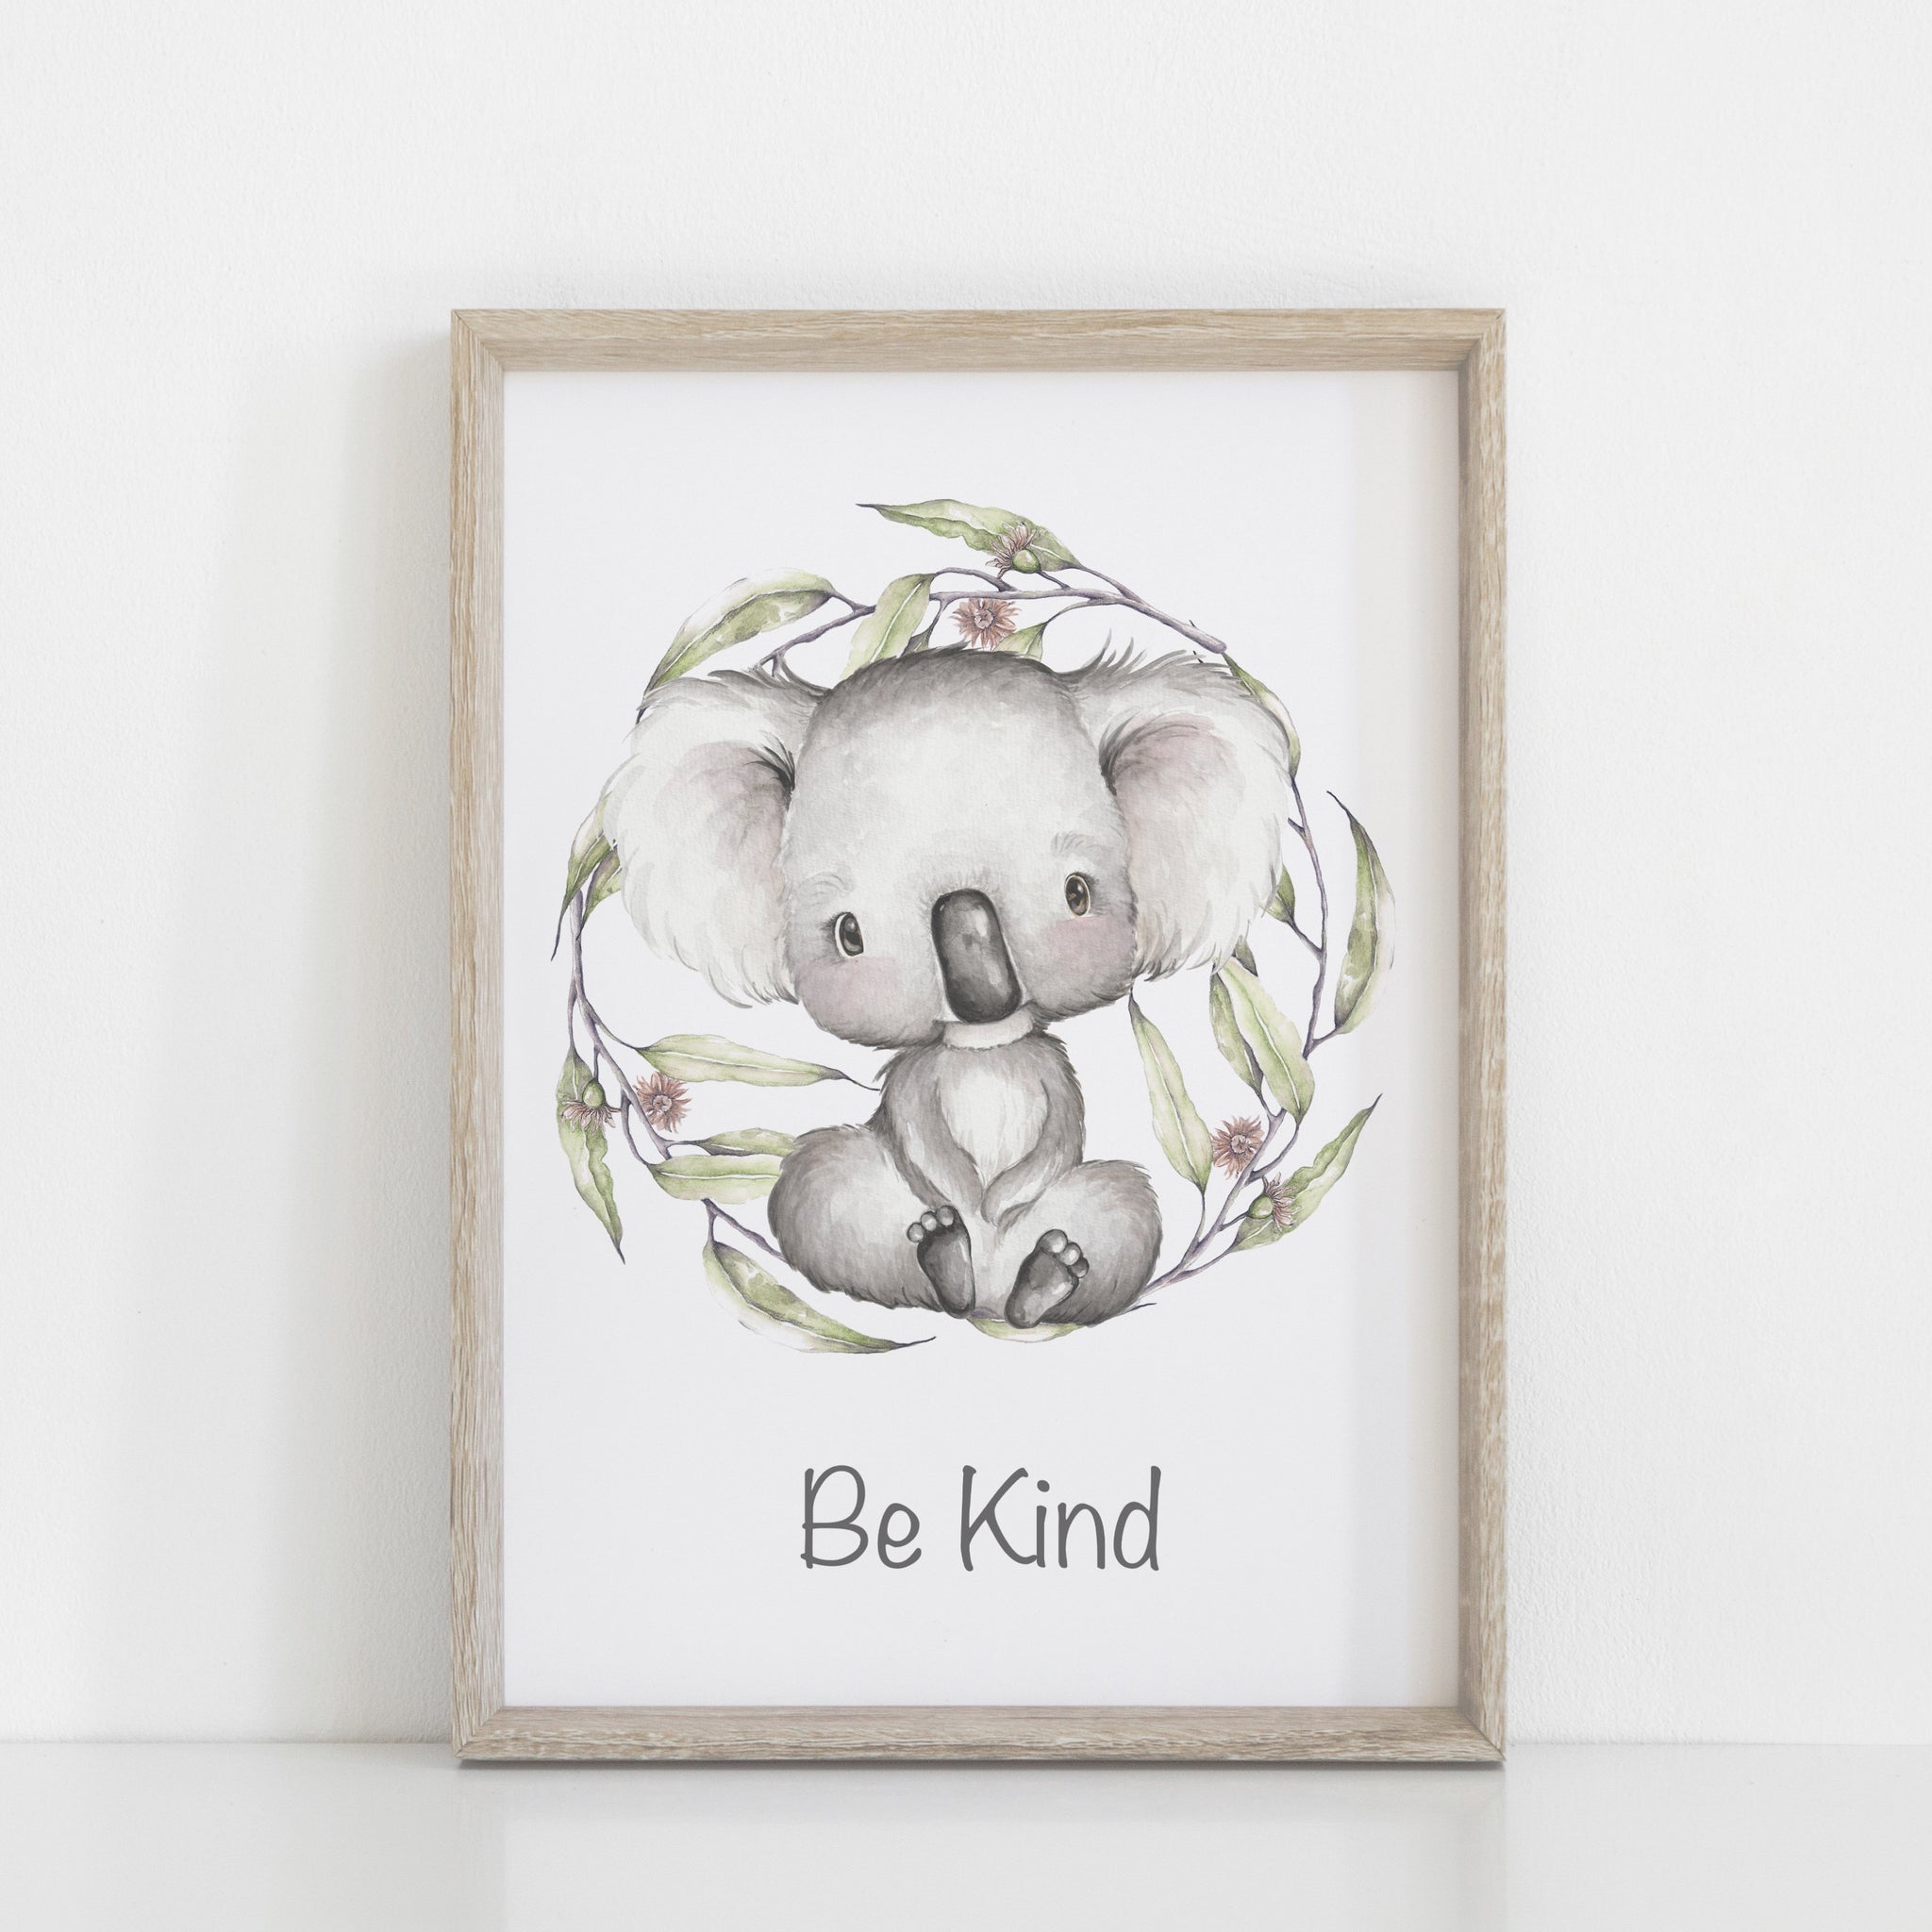 Koala Wall Print, Australiana Nursery Decor, "Be Kind" Koala, Greenery Wreath, Baby Nursery Wall Print